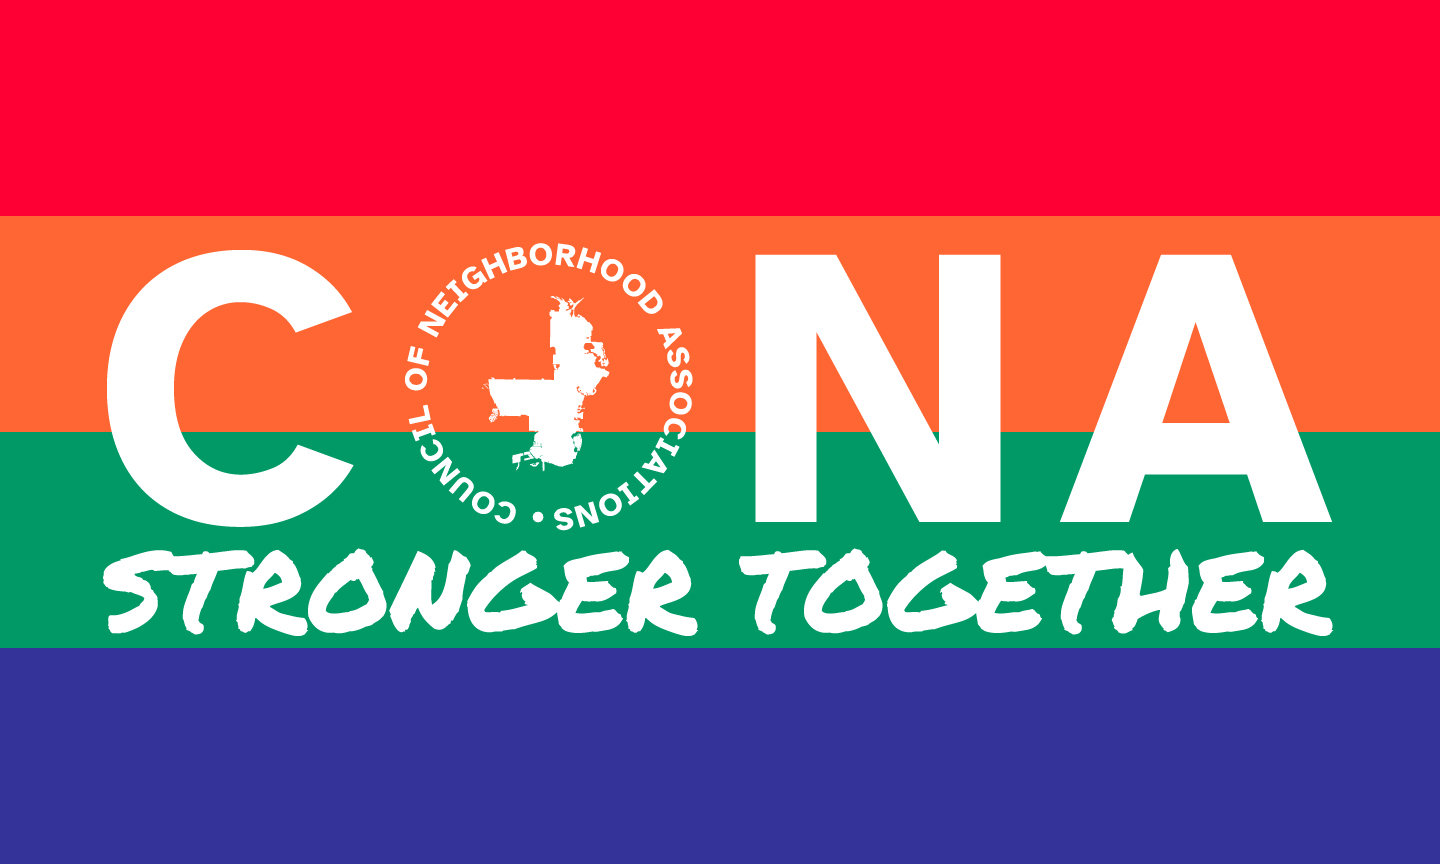 CONA – Council of Neighborhood Associations